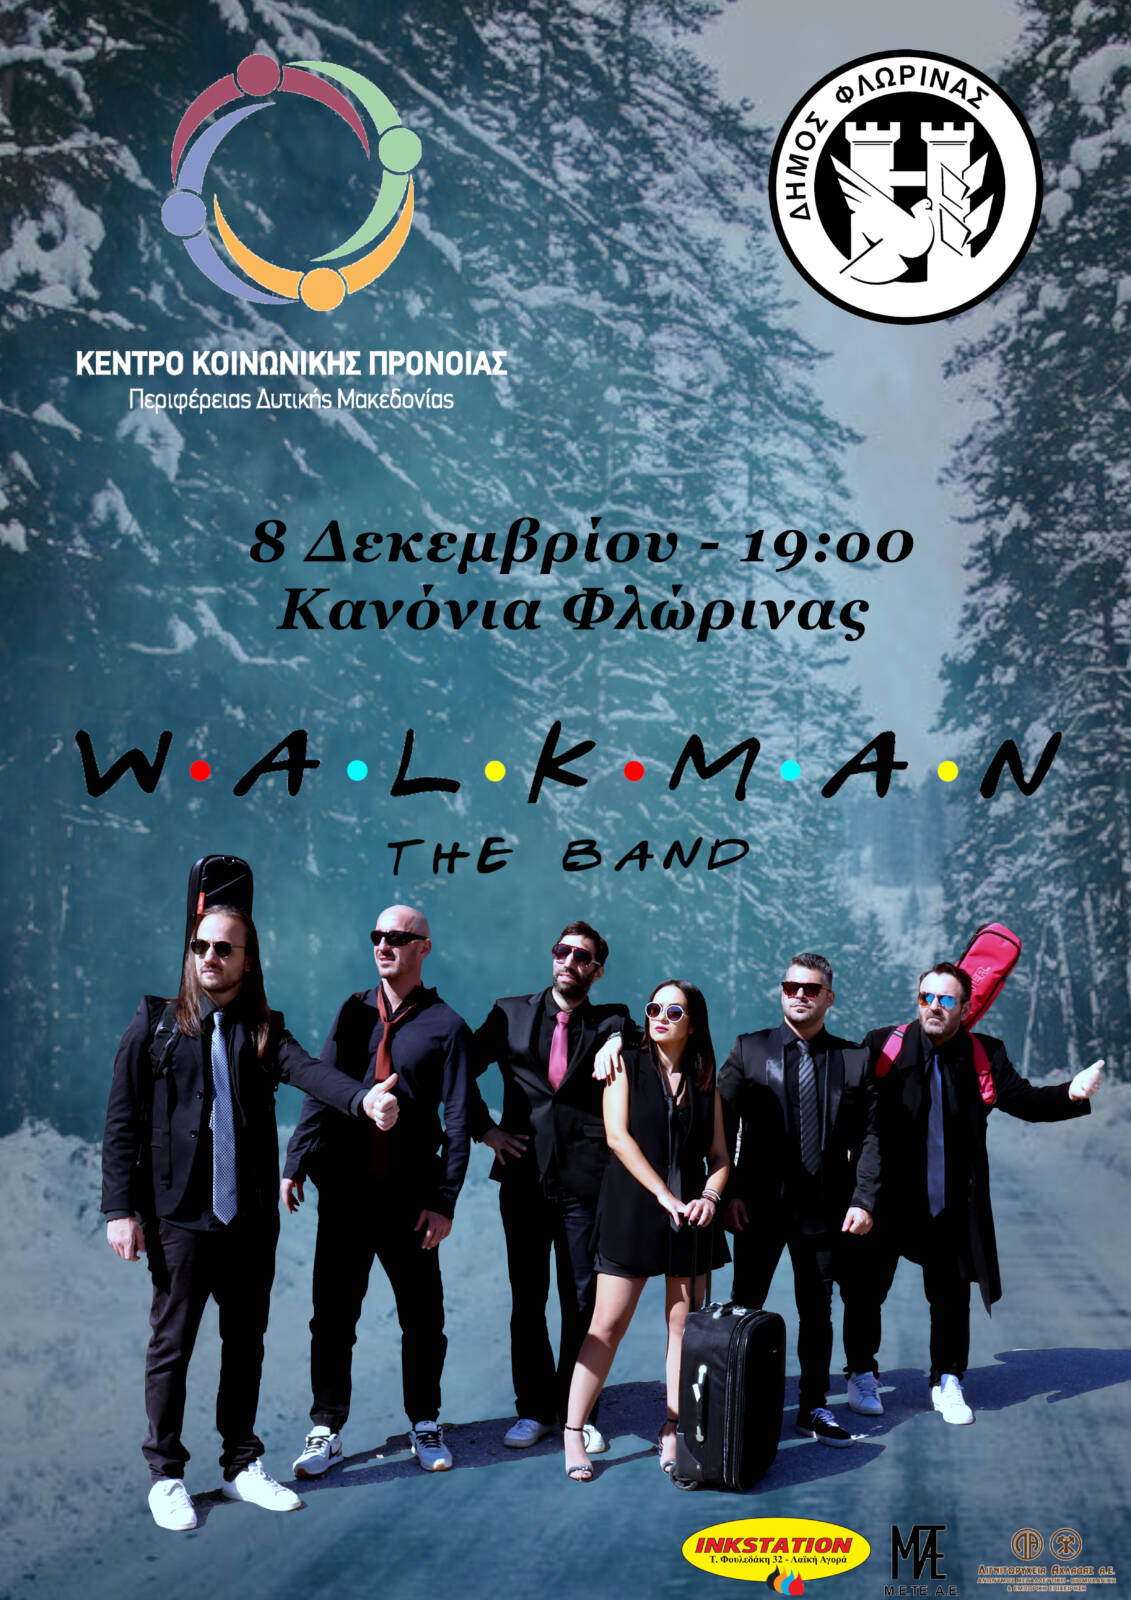 Kέντρο Κοινωνικής Πρόνοιας Περιφέρειας Δυτικής Μακεδονίας: Eκδήλωση με την επίσημη παρουσίαση του τραγουδιού του μουσικού συγκροτήματος «Walkman the band» την Πέμπτη 8 Δεκεμβρίου στα Κανόνια Φλώρινας